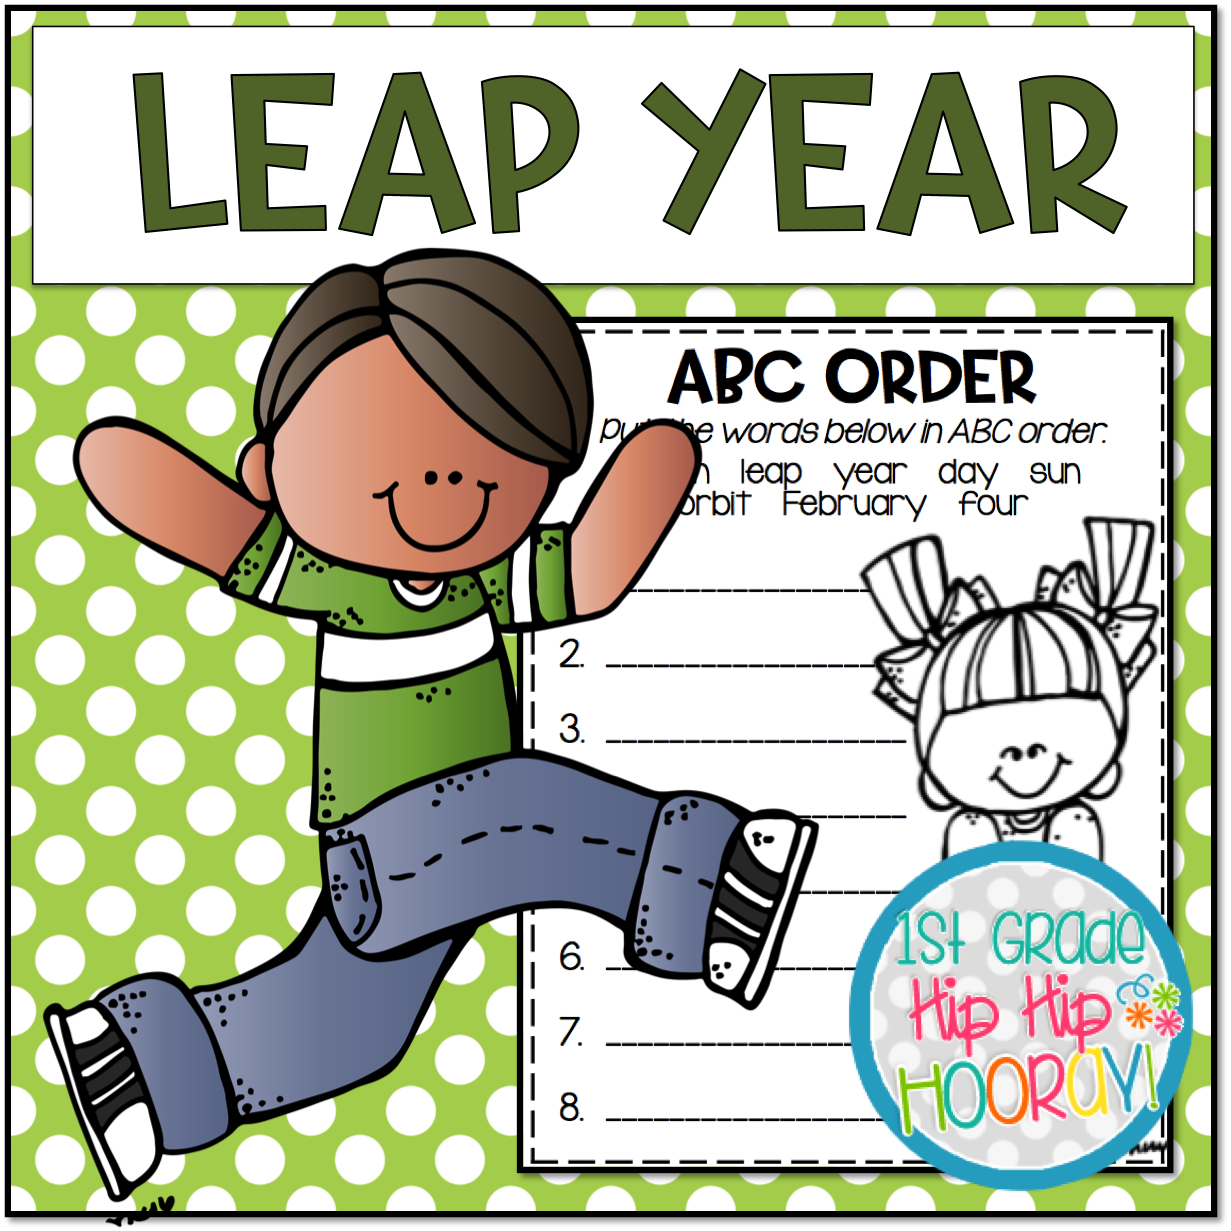 1st Grade Hip Hip Hooray Leap Year February 29th